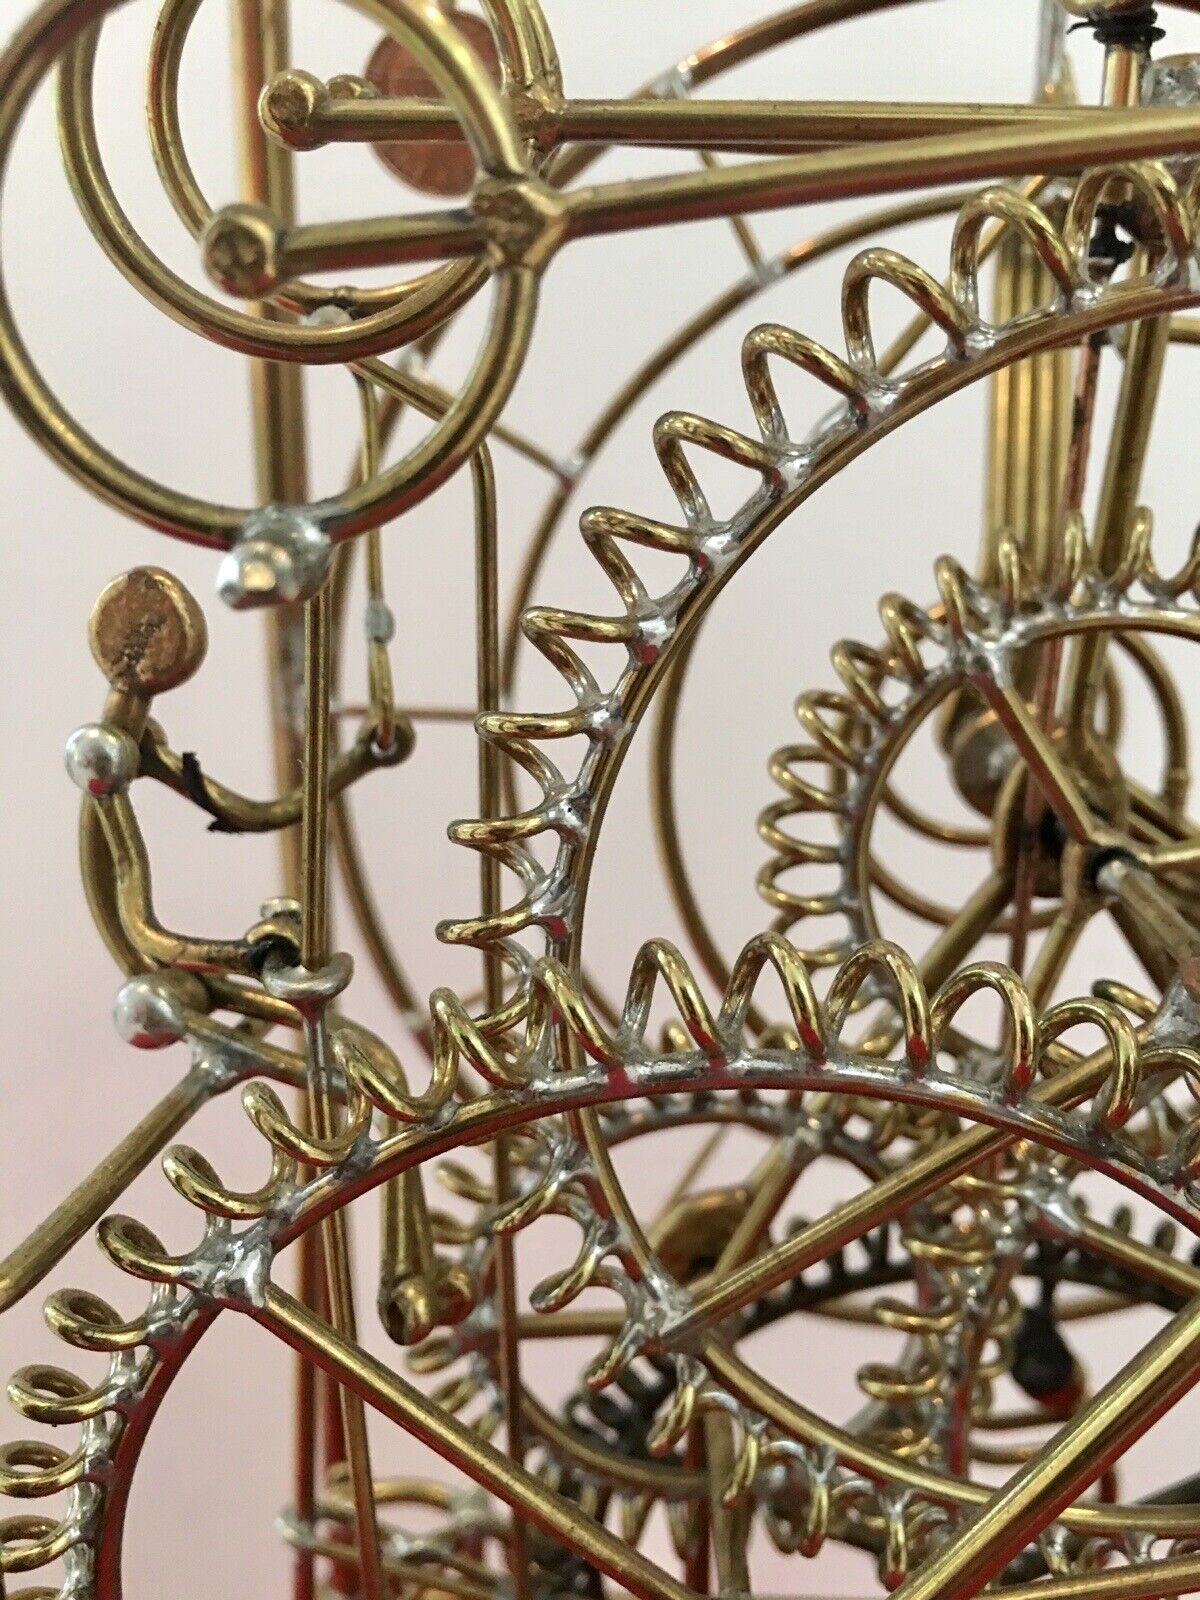 Authentic Kinetico Studios 7 Man Clock Sculpture by Gordon Bradt.